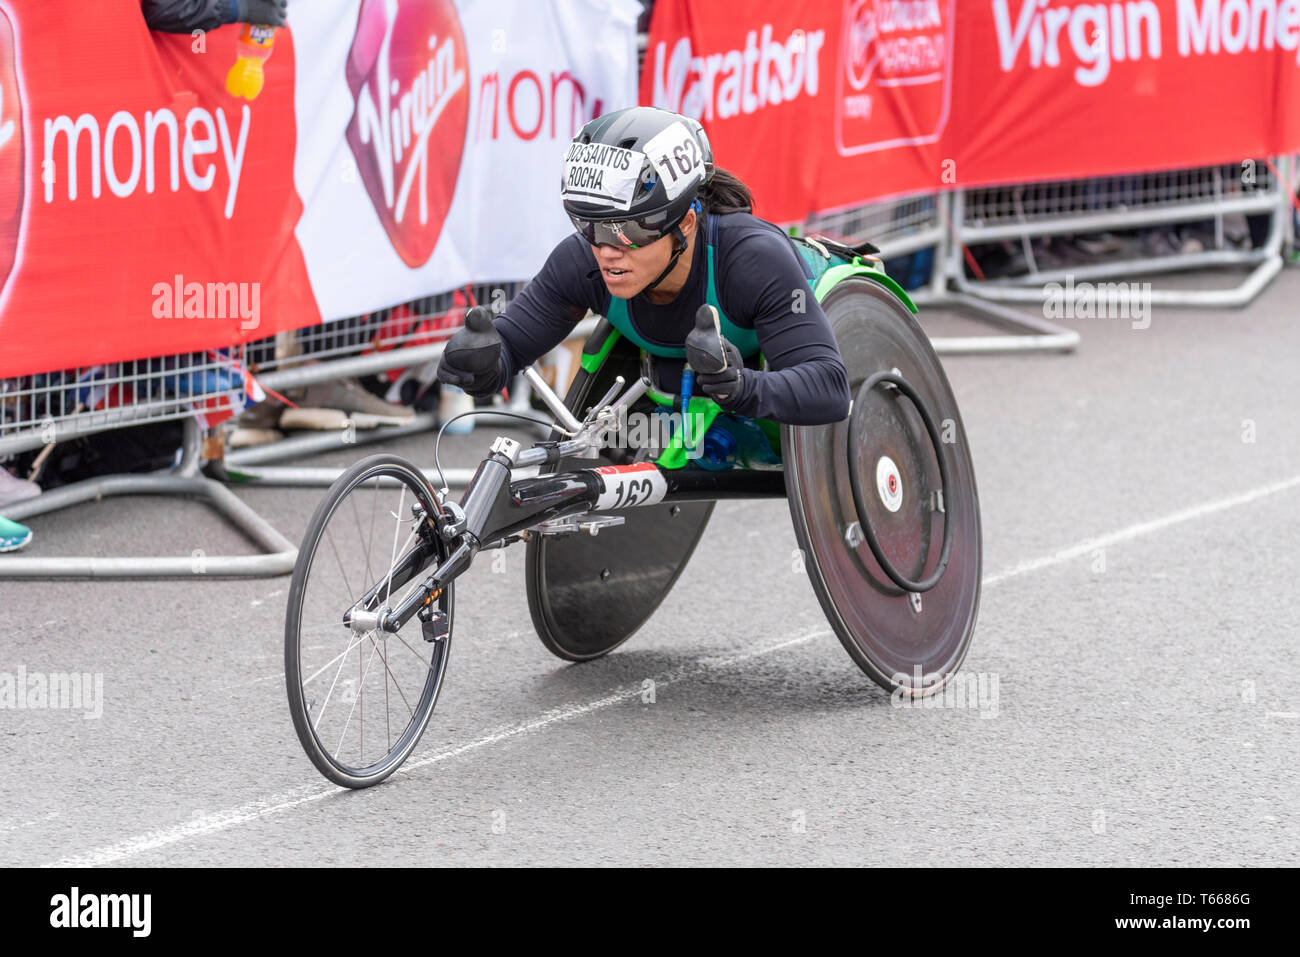 Aline dos Santos Rocha racing in the Virgin Money London Marathon 2019 wheelchair race near Tower Bridge, London, UK Stock Photo